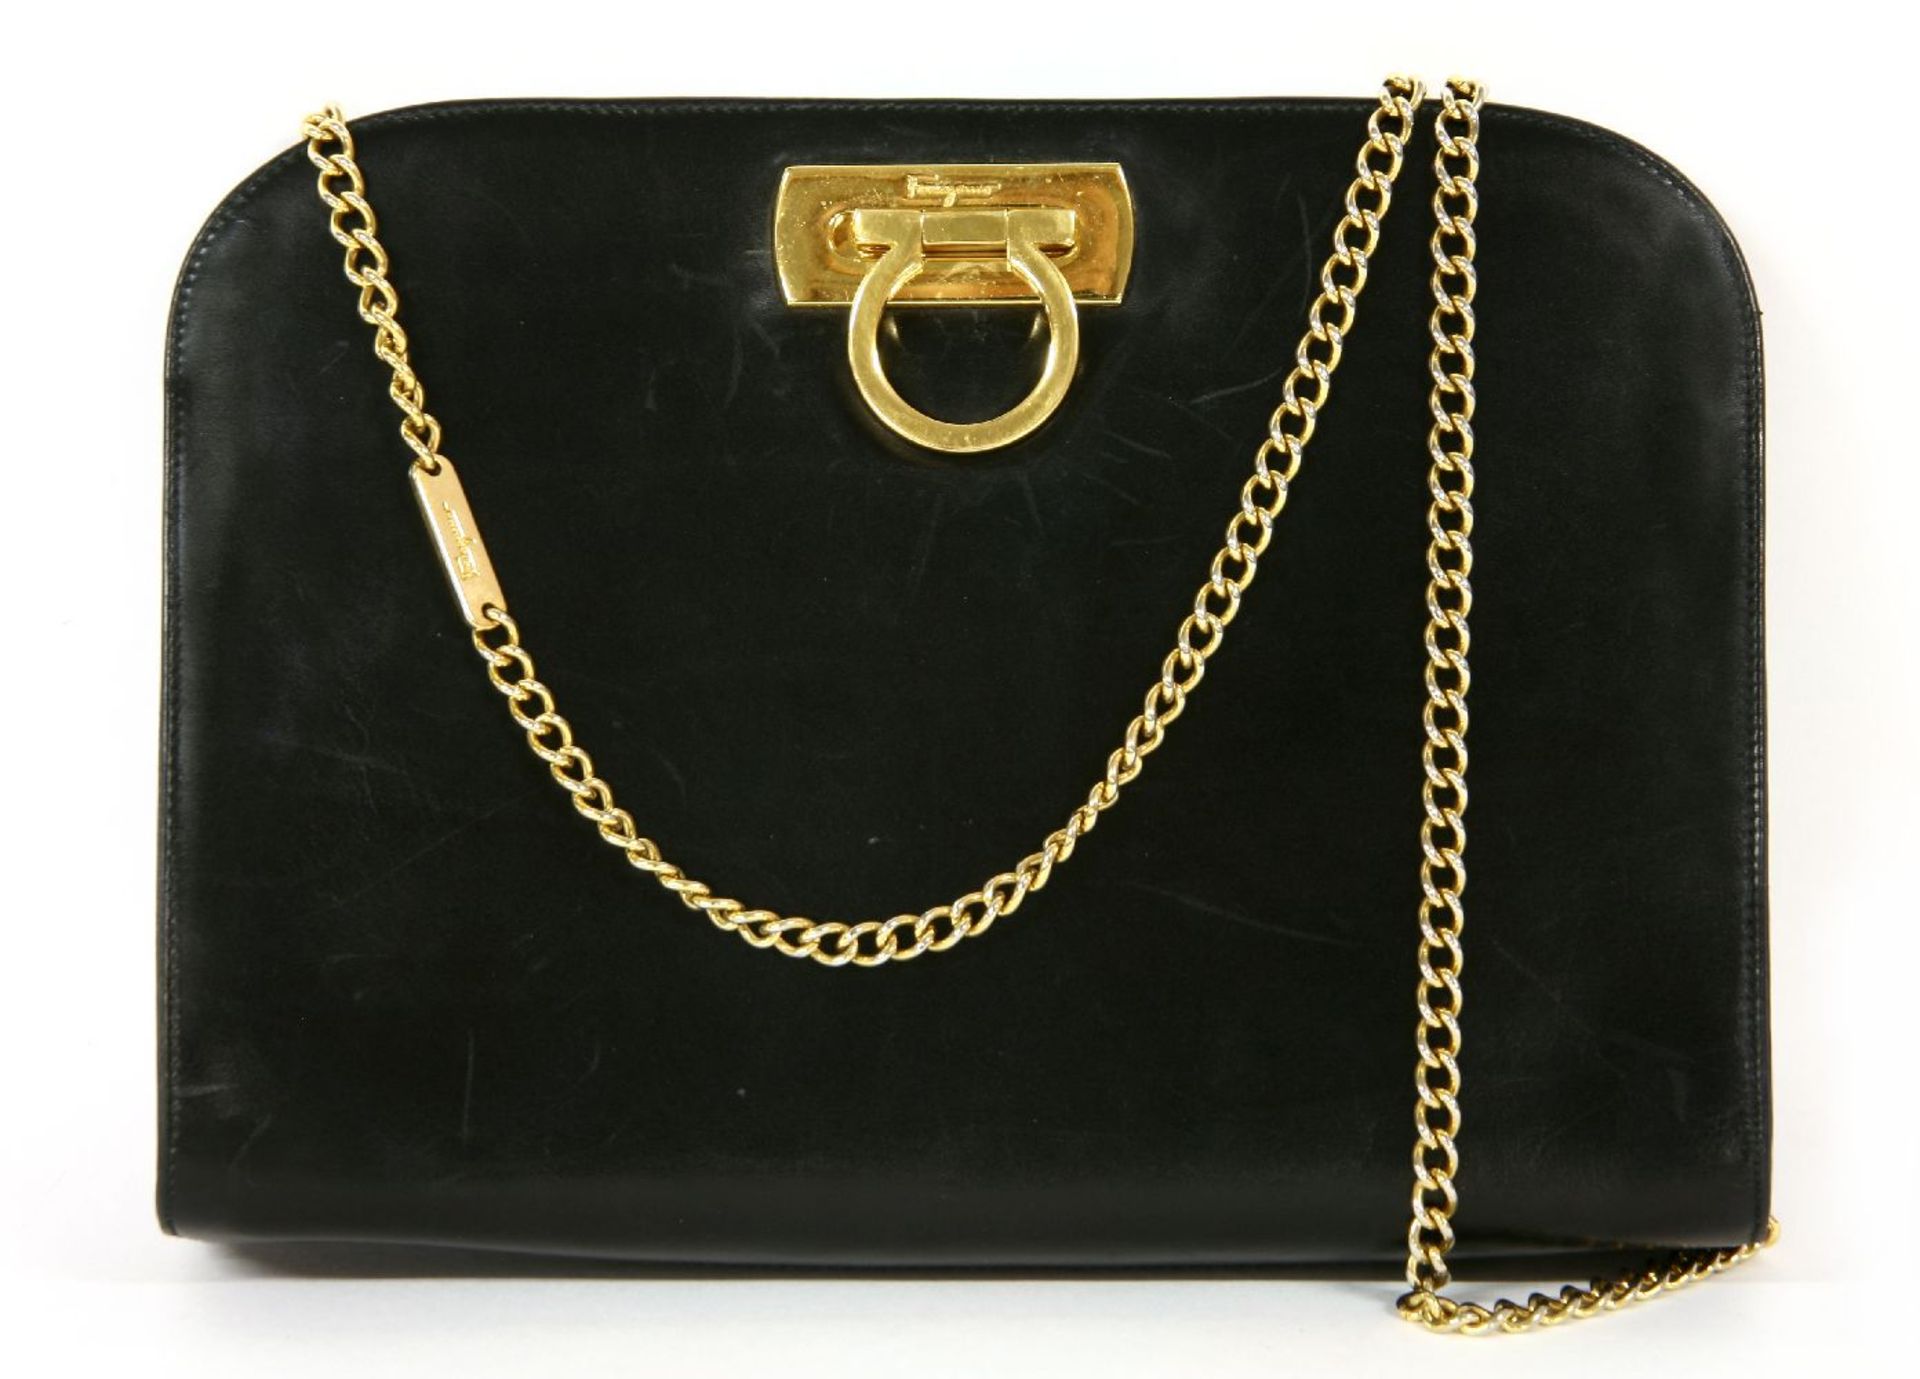 A Salvatore Ferragamo black leather handbag, chain shoulder strap, polished gold-tone hardware,